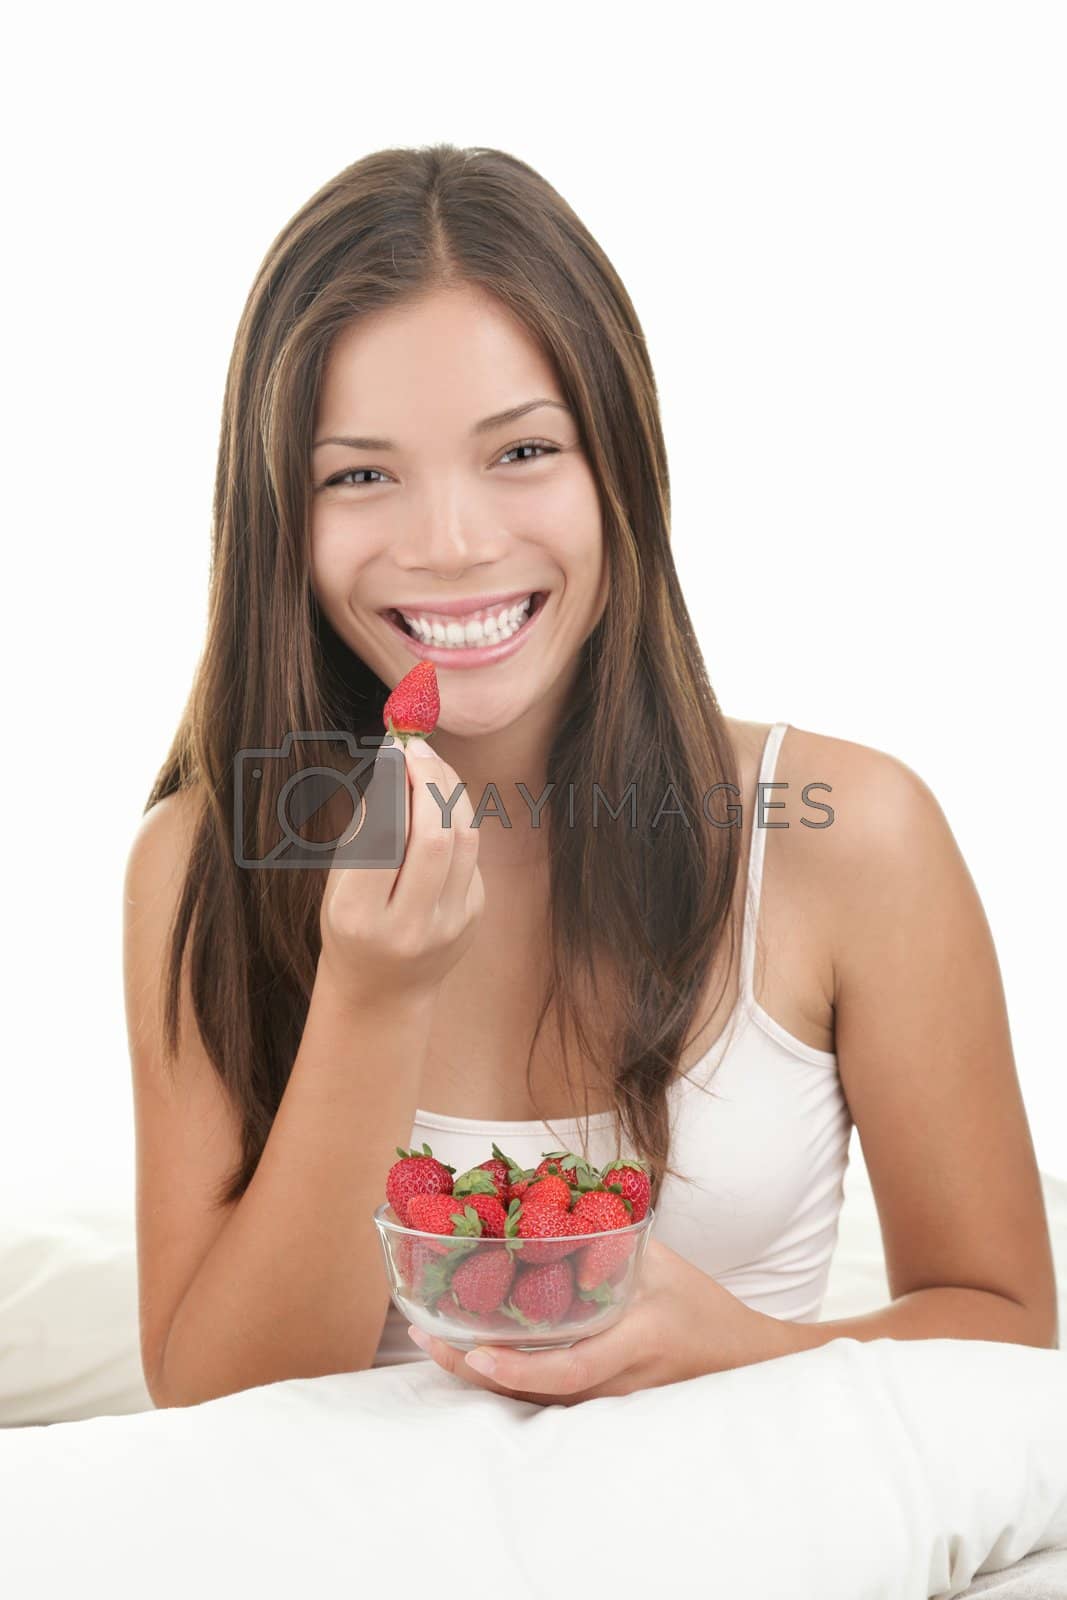 Royalty free image of Woman eating strawberries by Ariwasabi